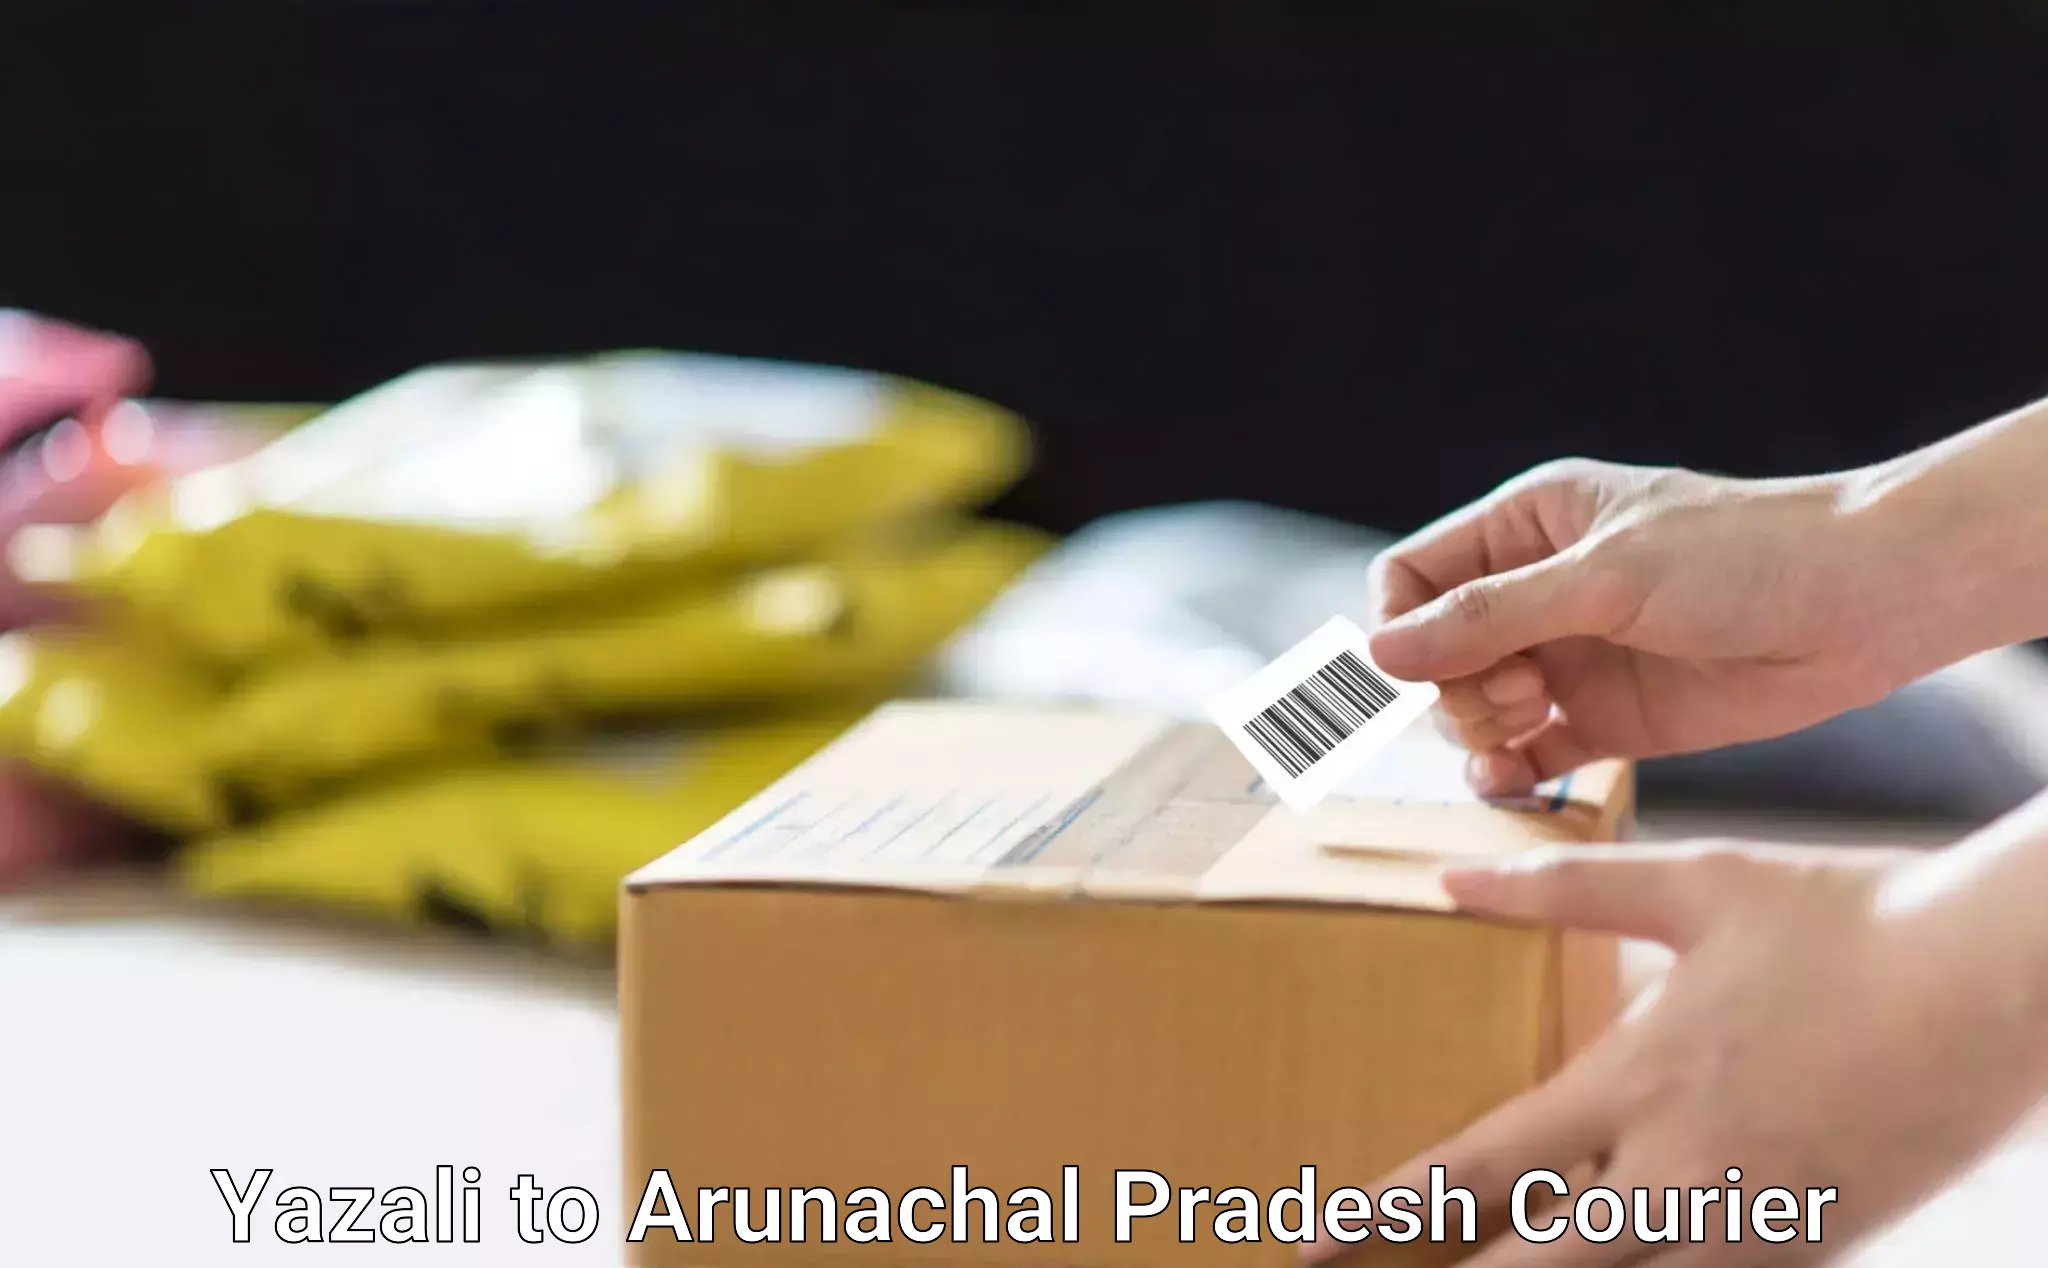 State-of-the-art courier technology Yazali to Arunachal Pradesh